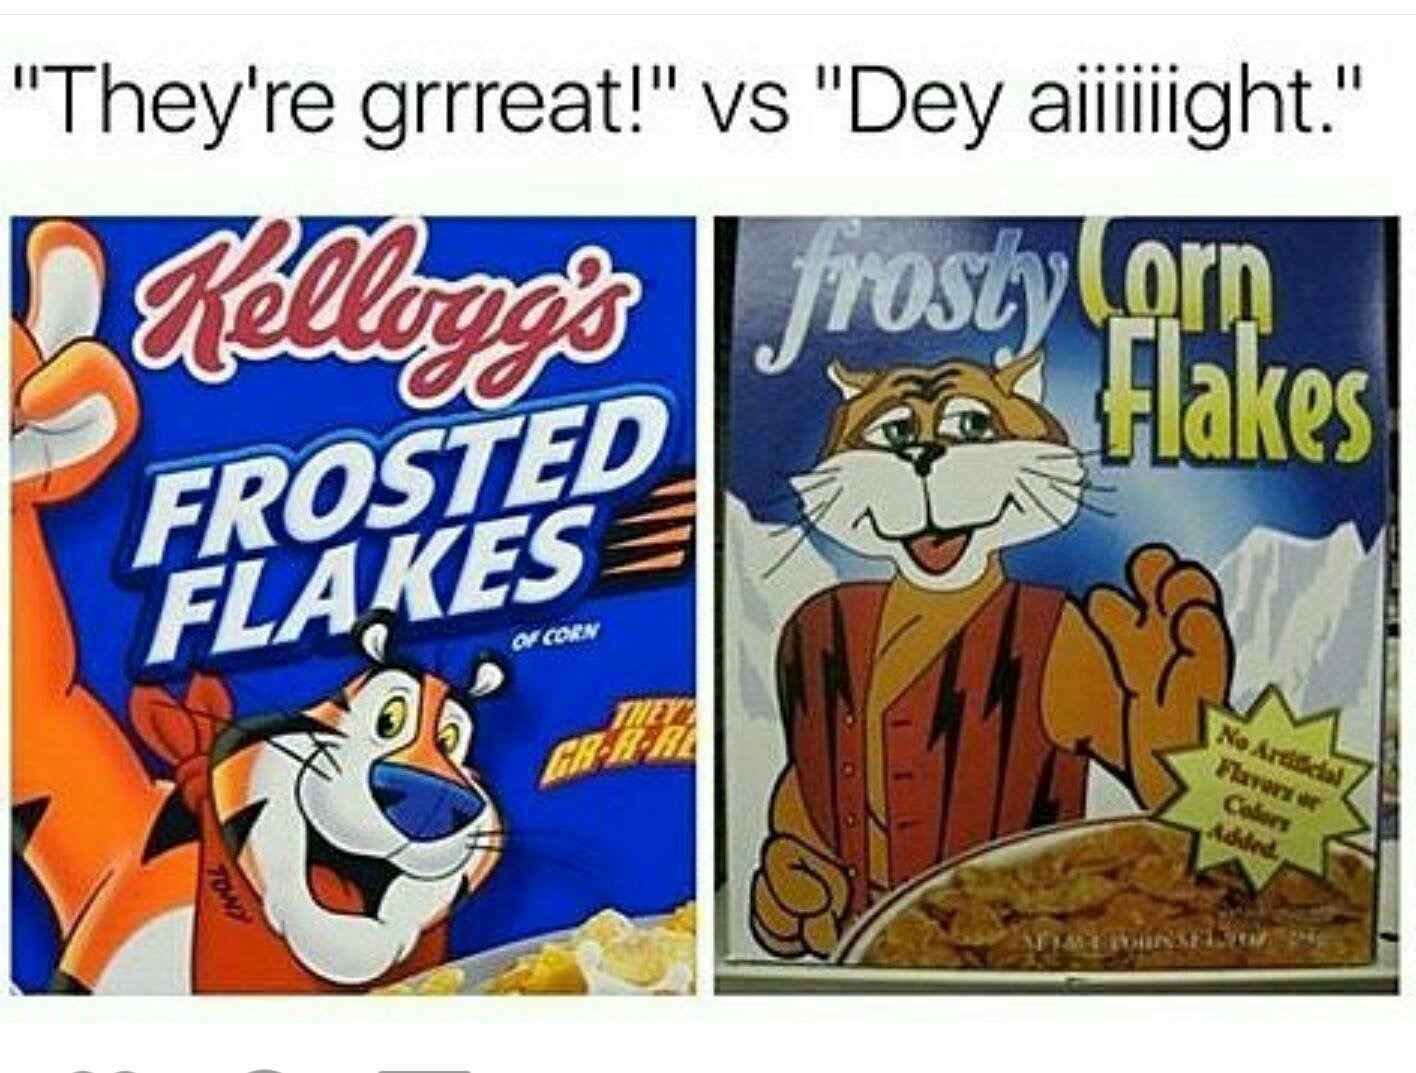 memes - off brand memes - "They're grrreat!" vs "Dey aiiiight." Kellogg's frosty Corn Frosted Flakespa Llakes O Con